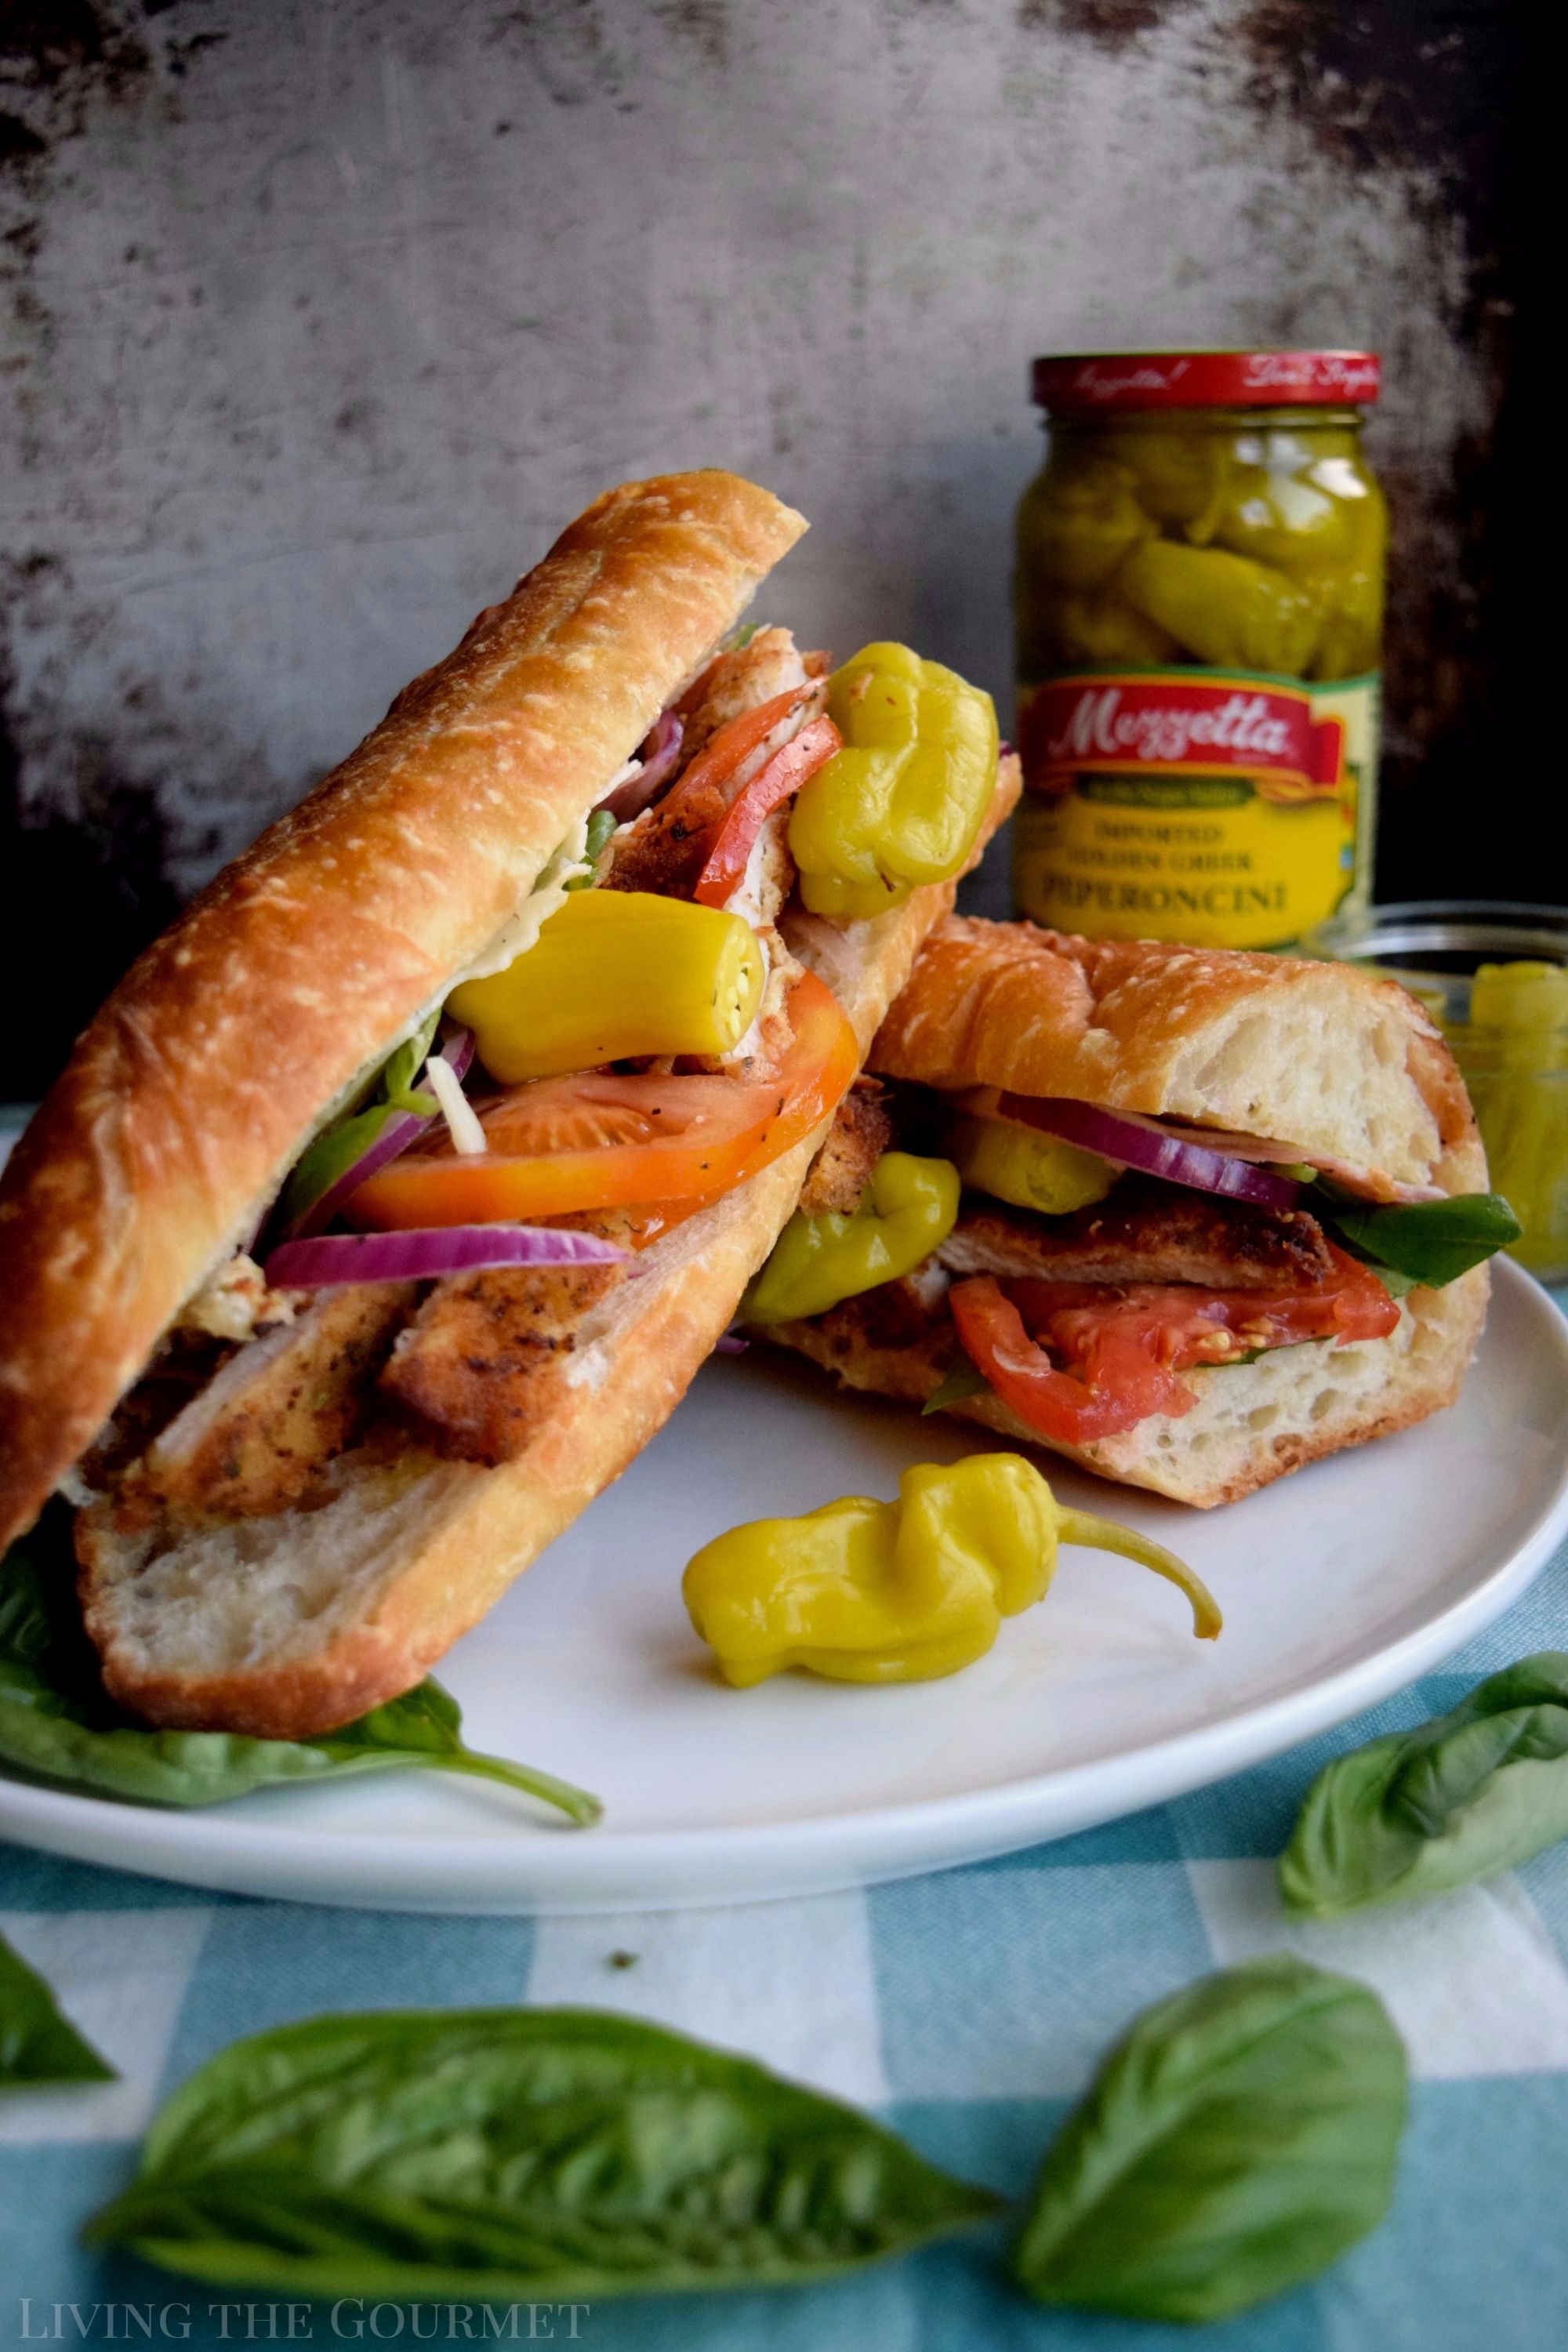 Living the Gourmet: Italian Peperoncini Sub Sandwiches are a delicious way to enjoy the mildly piquant, fruity flavor of Mezzetta Peperoncini | #DontForgettaMezzetta #Mezzetta